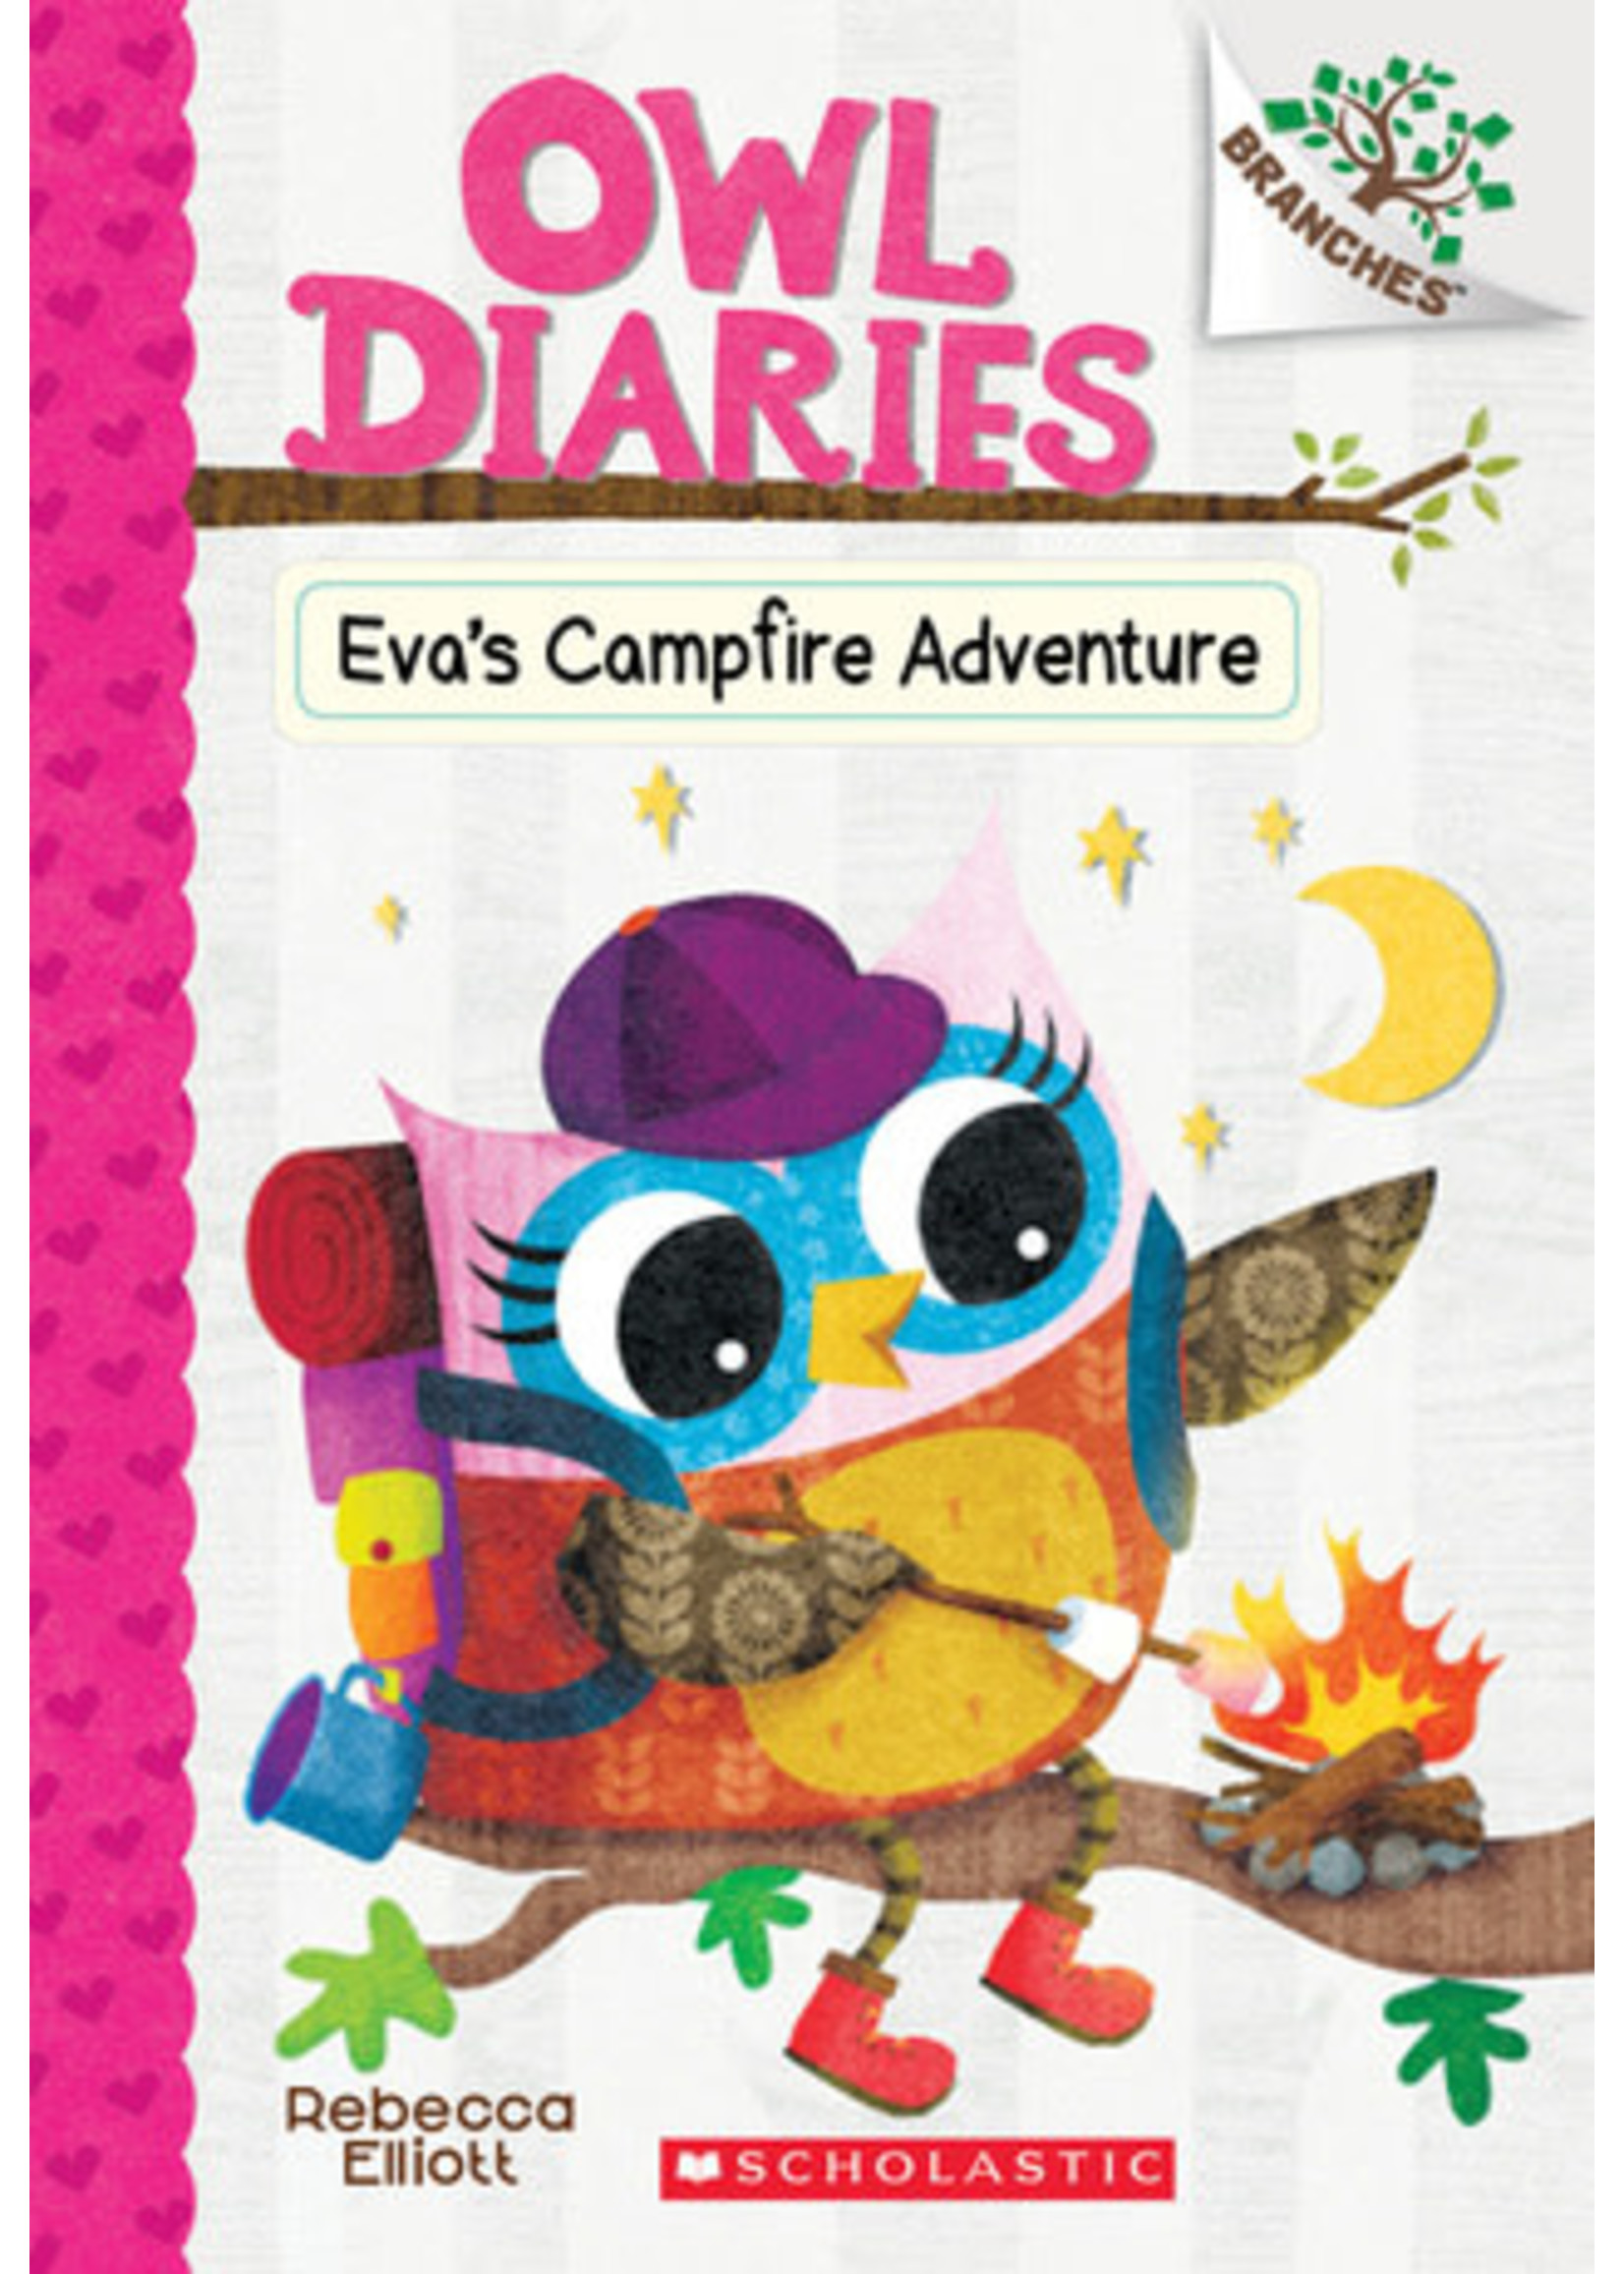 Eva's Campfire Adventure (Owl Diaries #12) by Rebecca Elliott